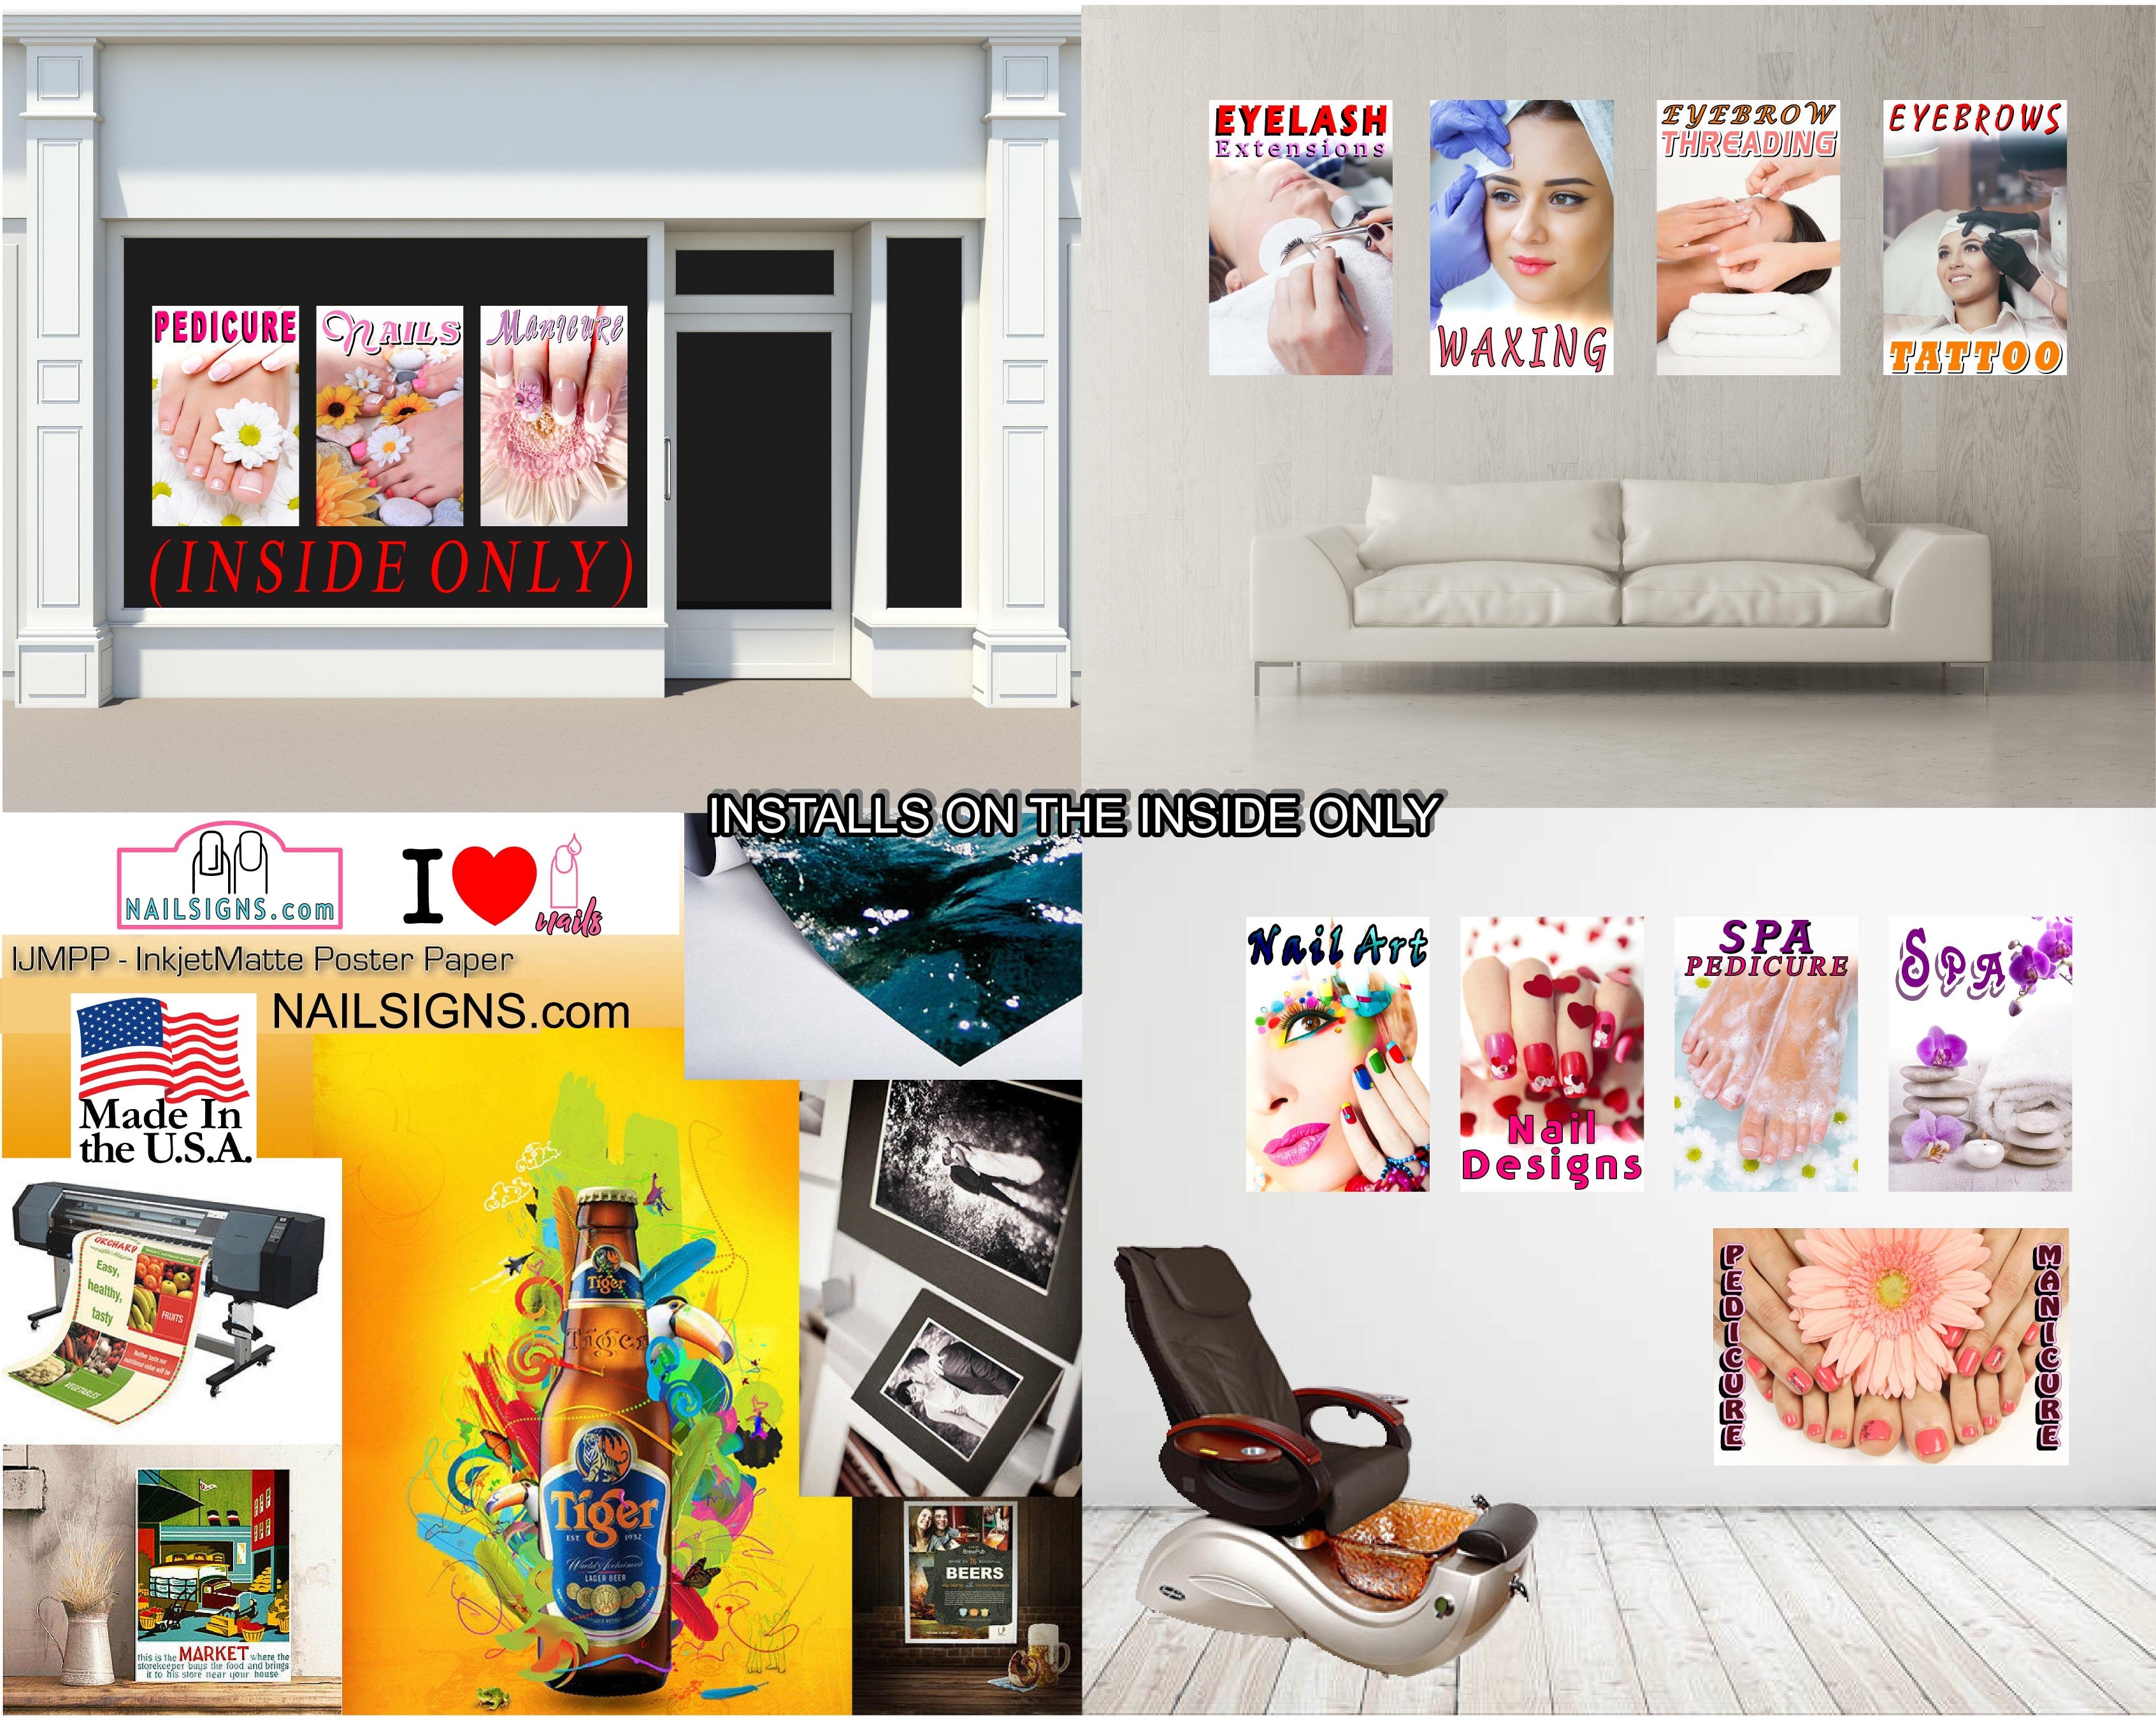 Pedicure & Manicure 17 Photo-Realistic Paper Poster Premium Matte Interior Inside Sign Advertising Marketing Wall Window Non-Laminated Vertical